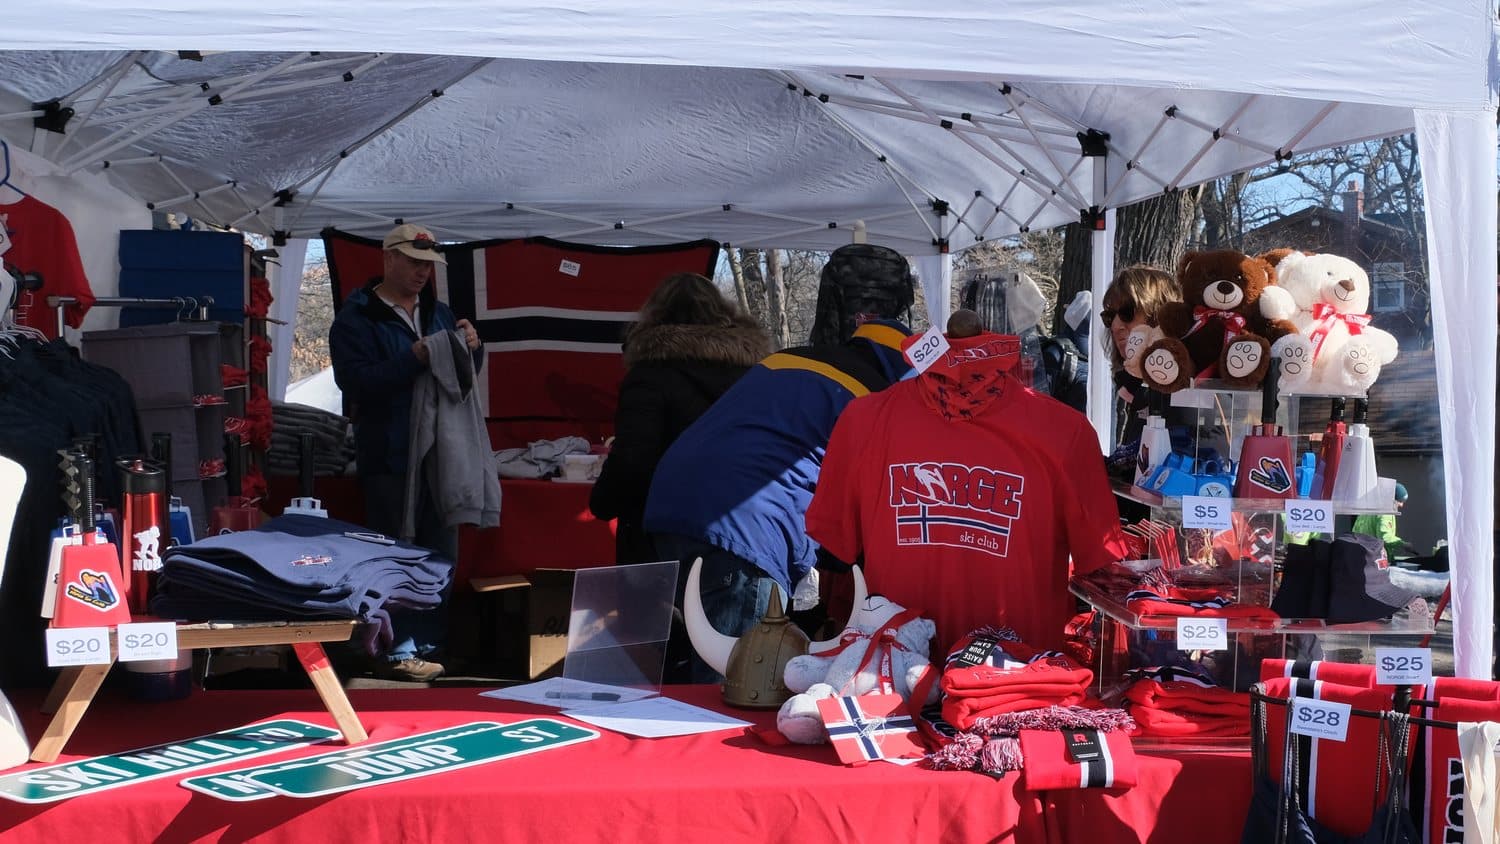 Norge souvenirs at the 118th annual Norge Ski Club, winter tournament, 2023.